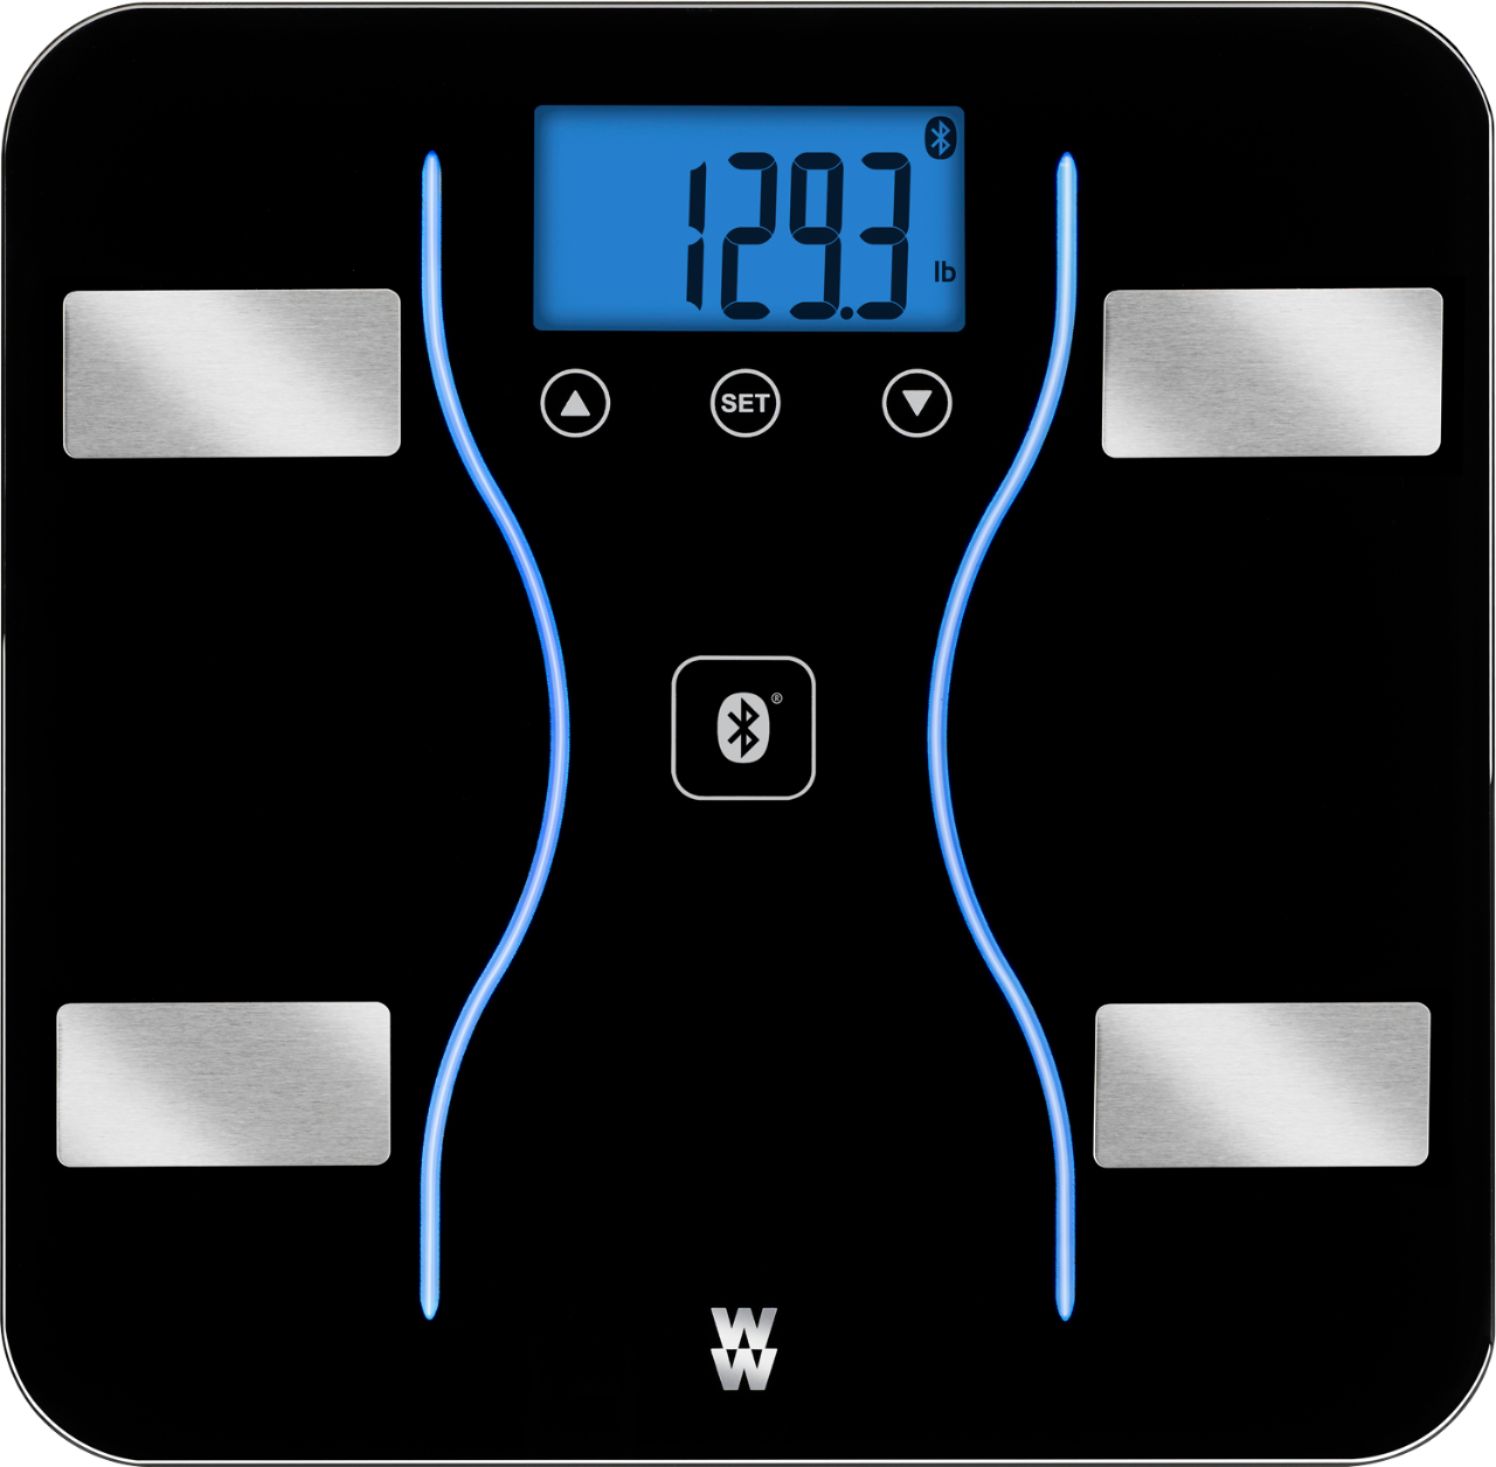 Conair Weight Watchers Bluetooth Body Analysis Scale White WW912WXF - Best  Buy